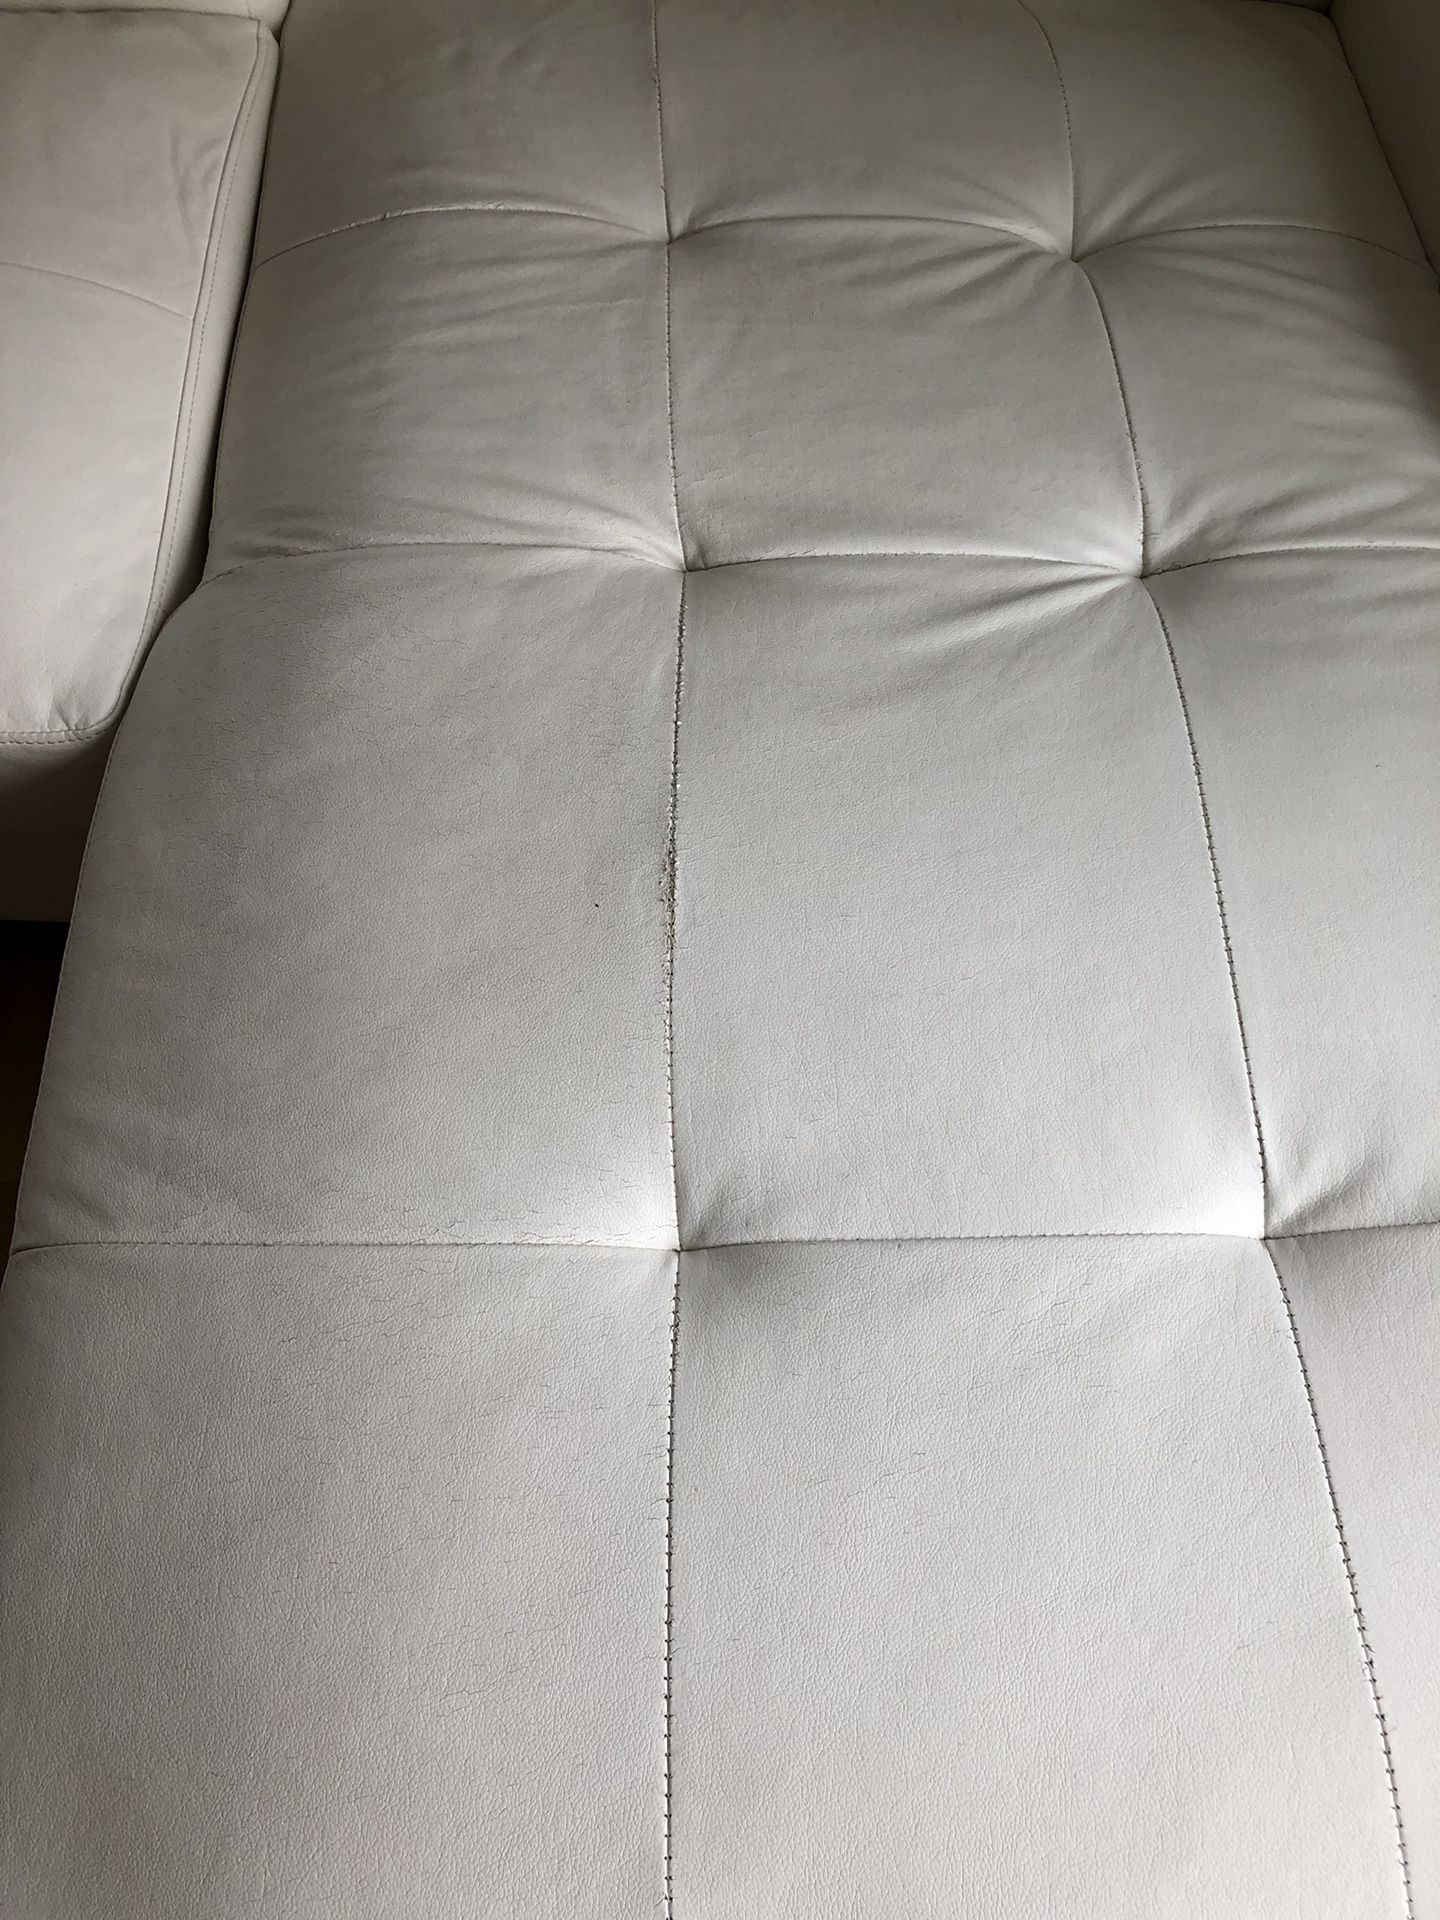 Leather sofa original price 2k asking 300